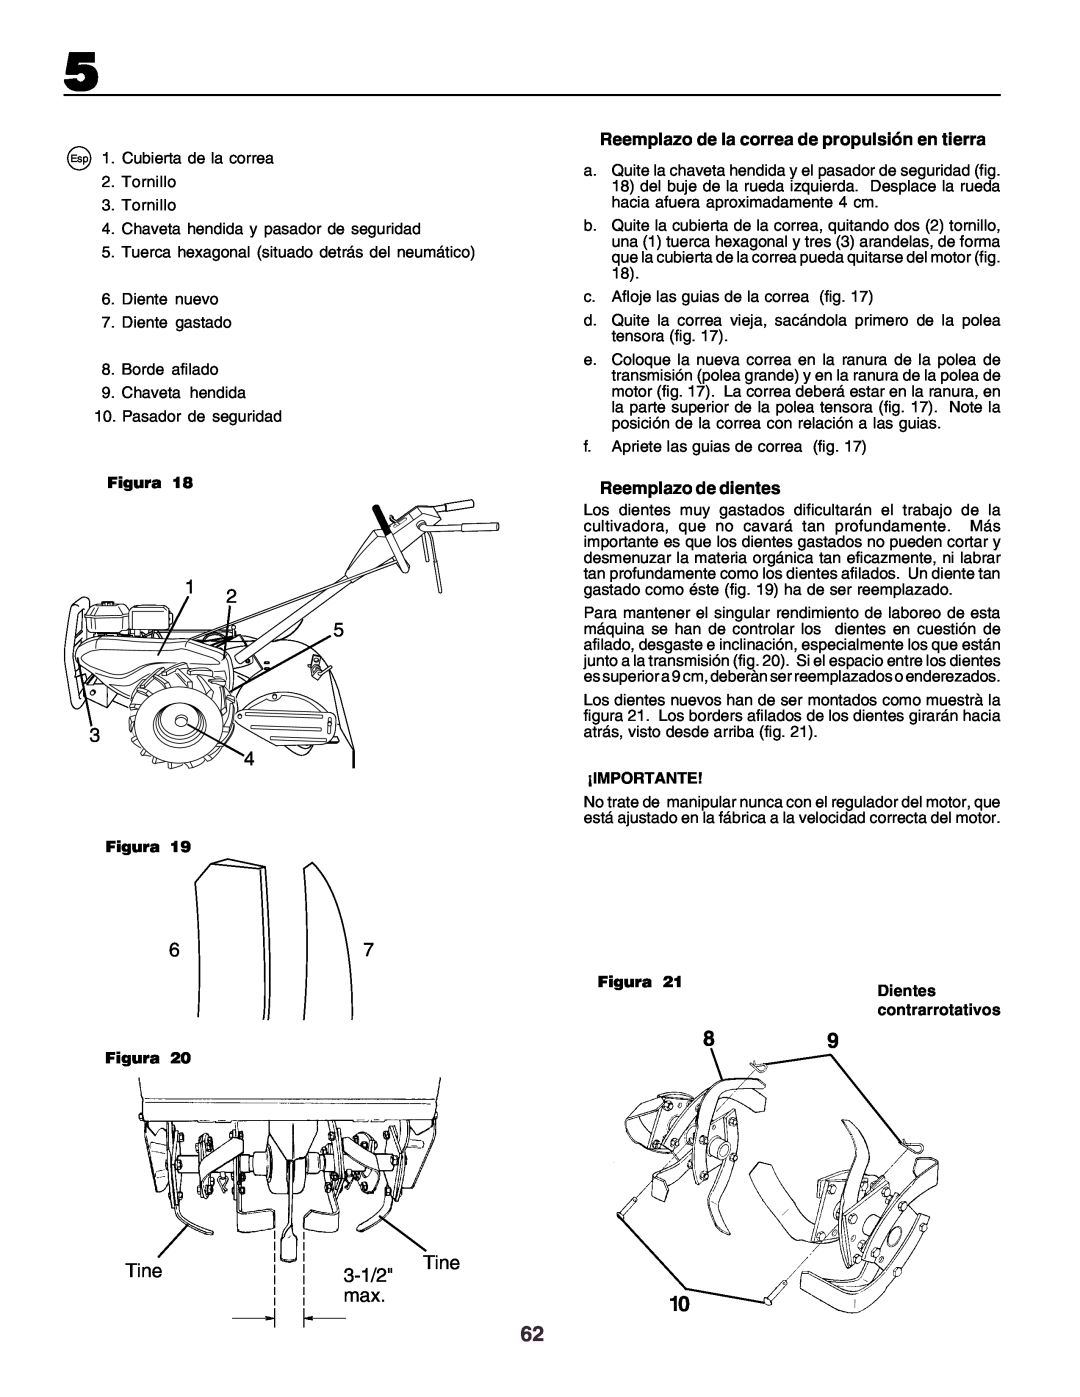 Husqvarna crt51 instruction manual Tine, 3-1/2, Figura, ¡Importante, Dientes, contrarrotativos 